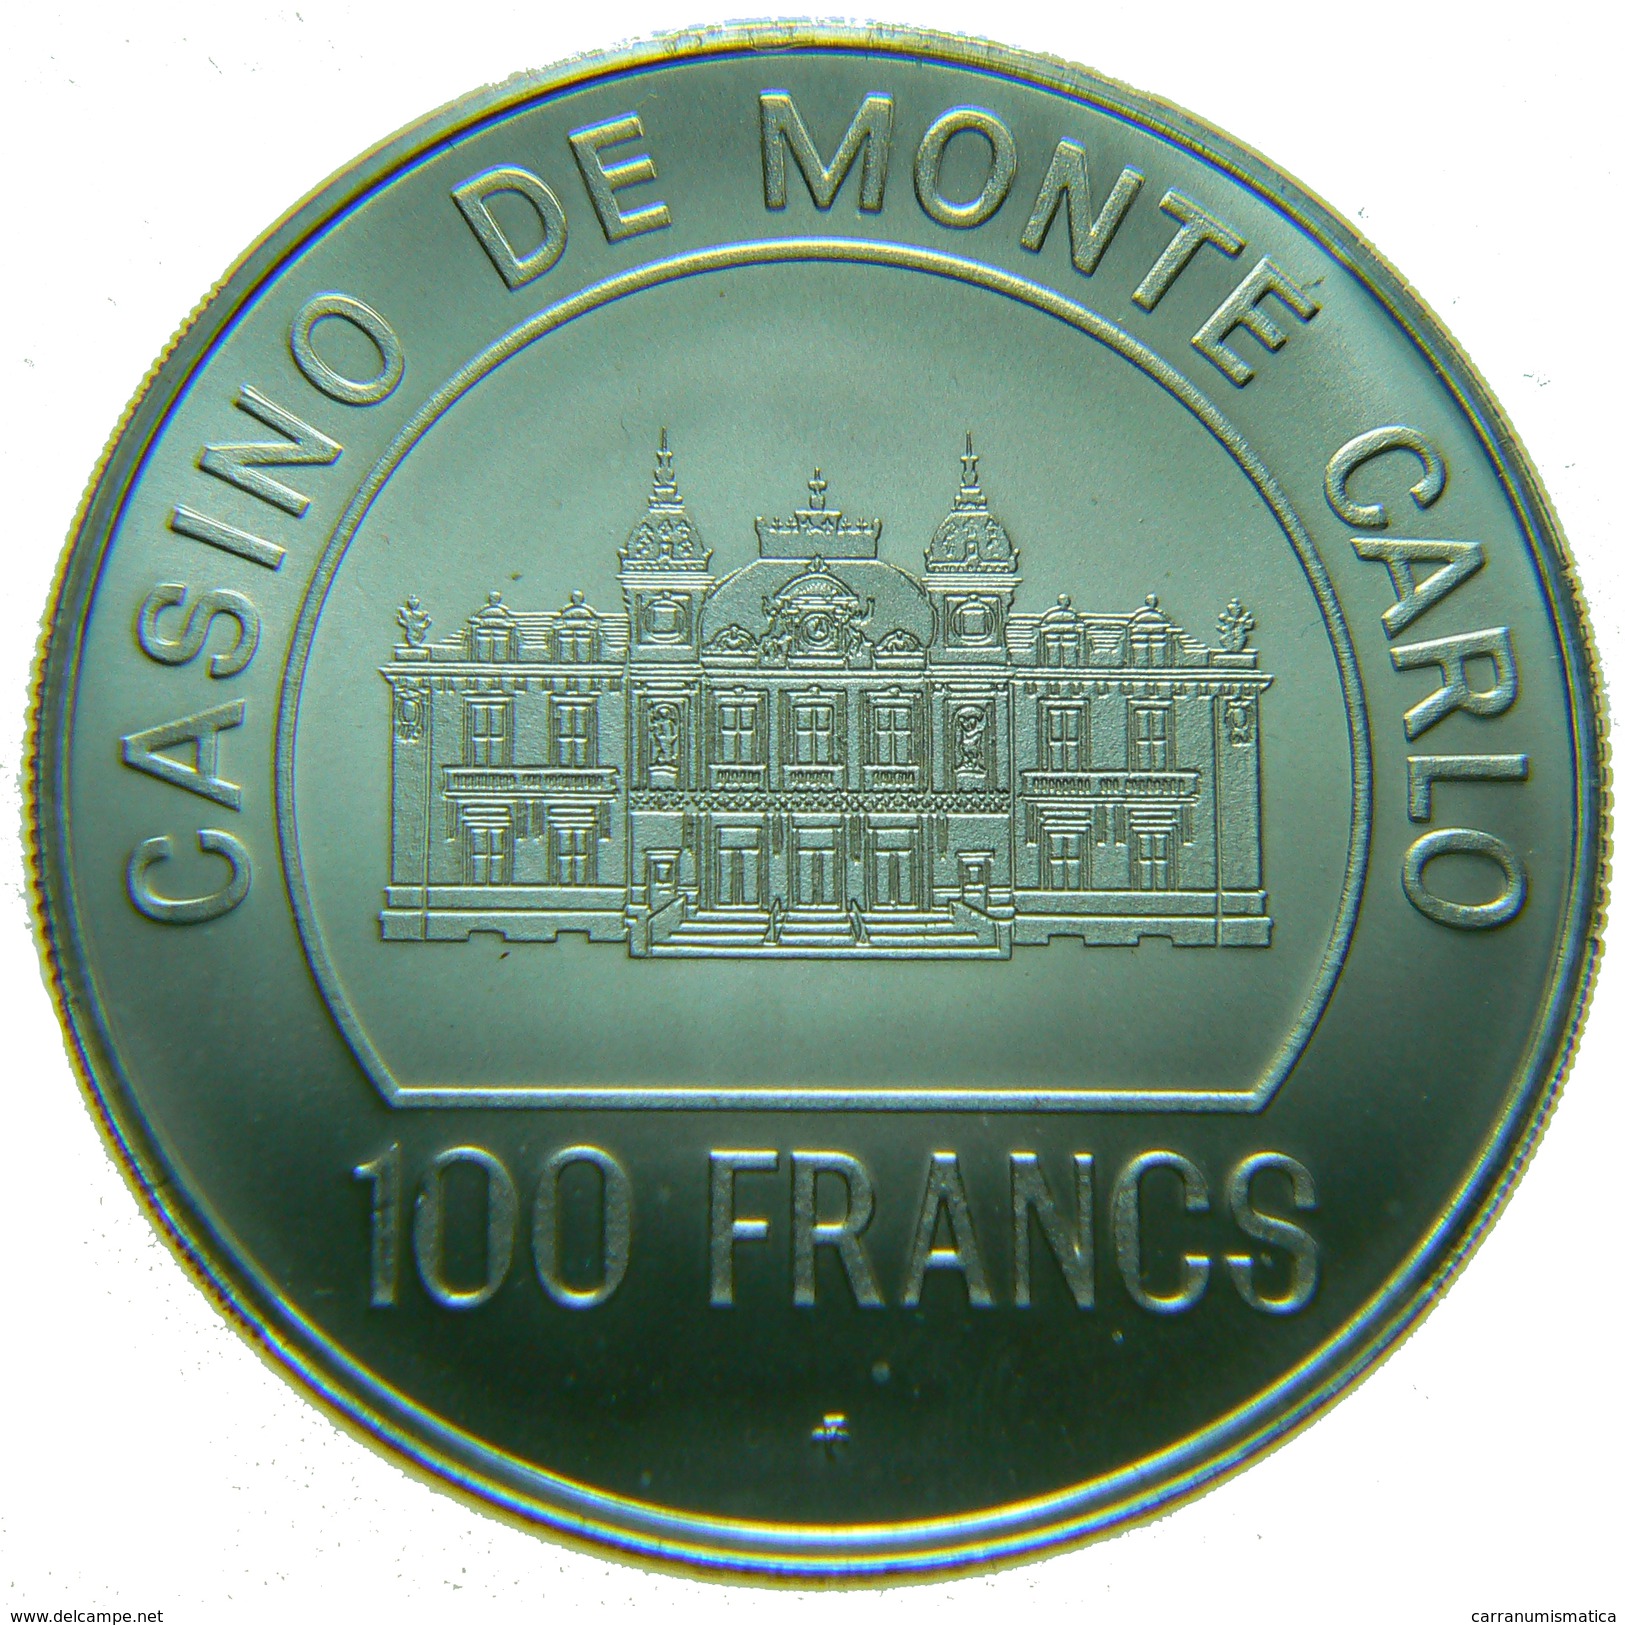 [NC] MONACO MONTE CARLO 100 FRANCS JETON TOKEN GETTONE ARGENTO SILVER - Casino